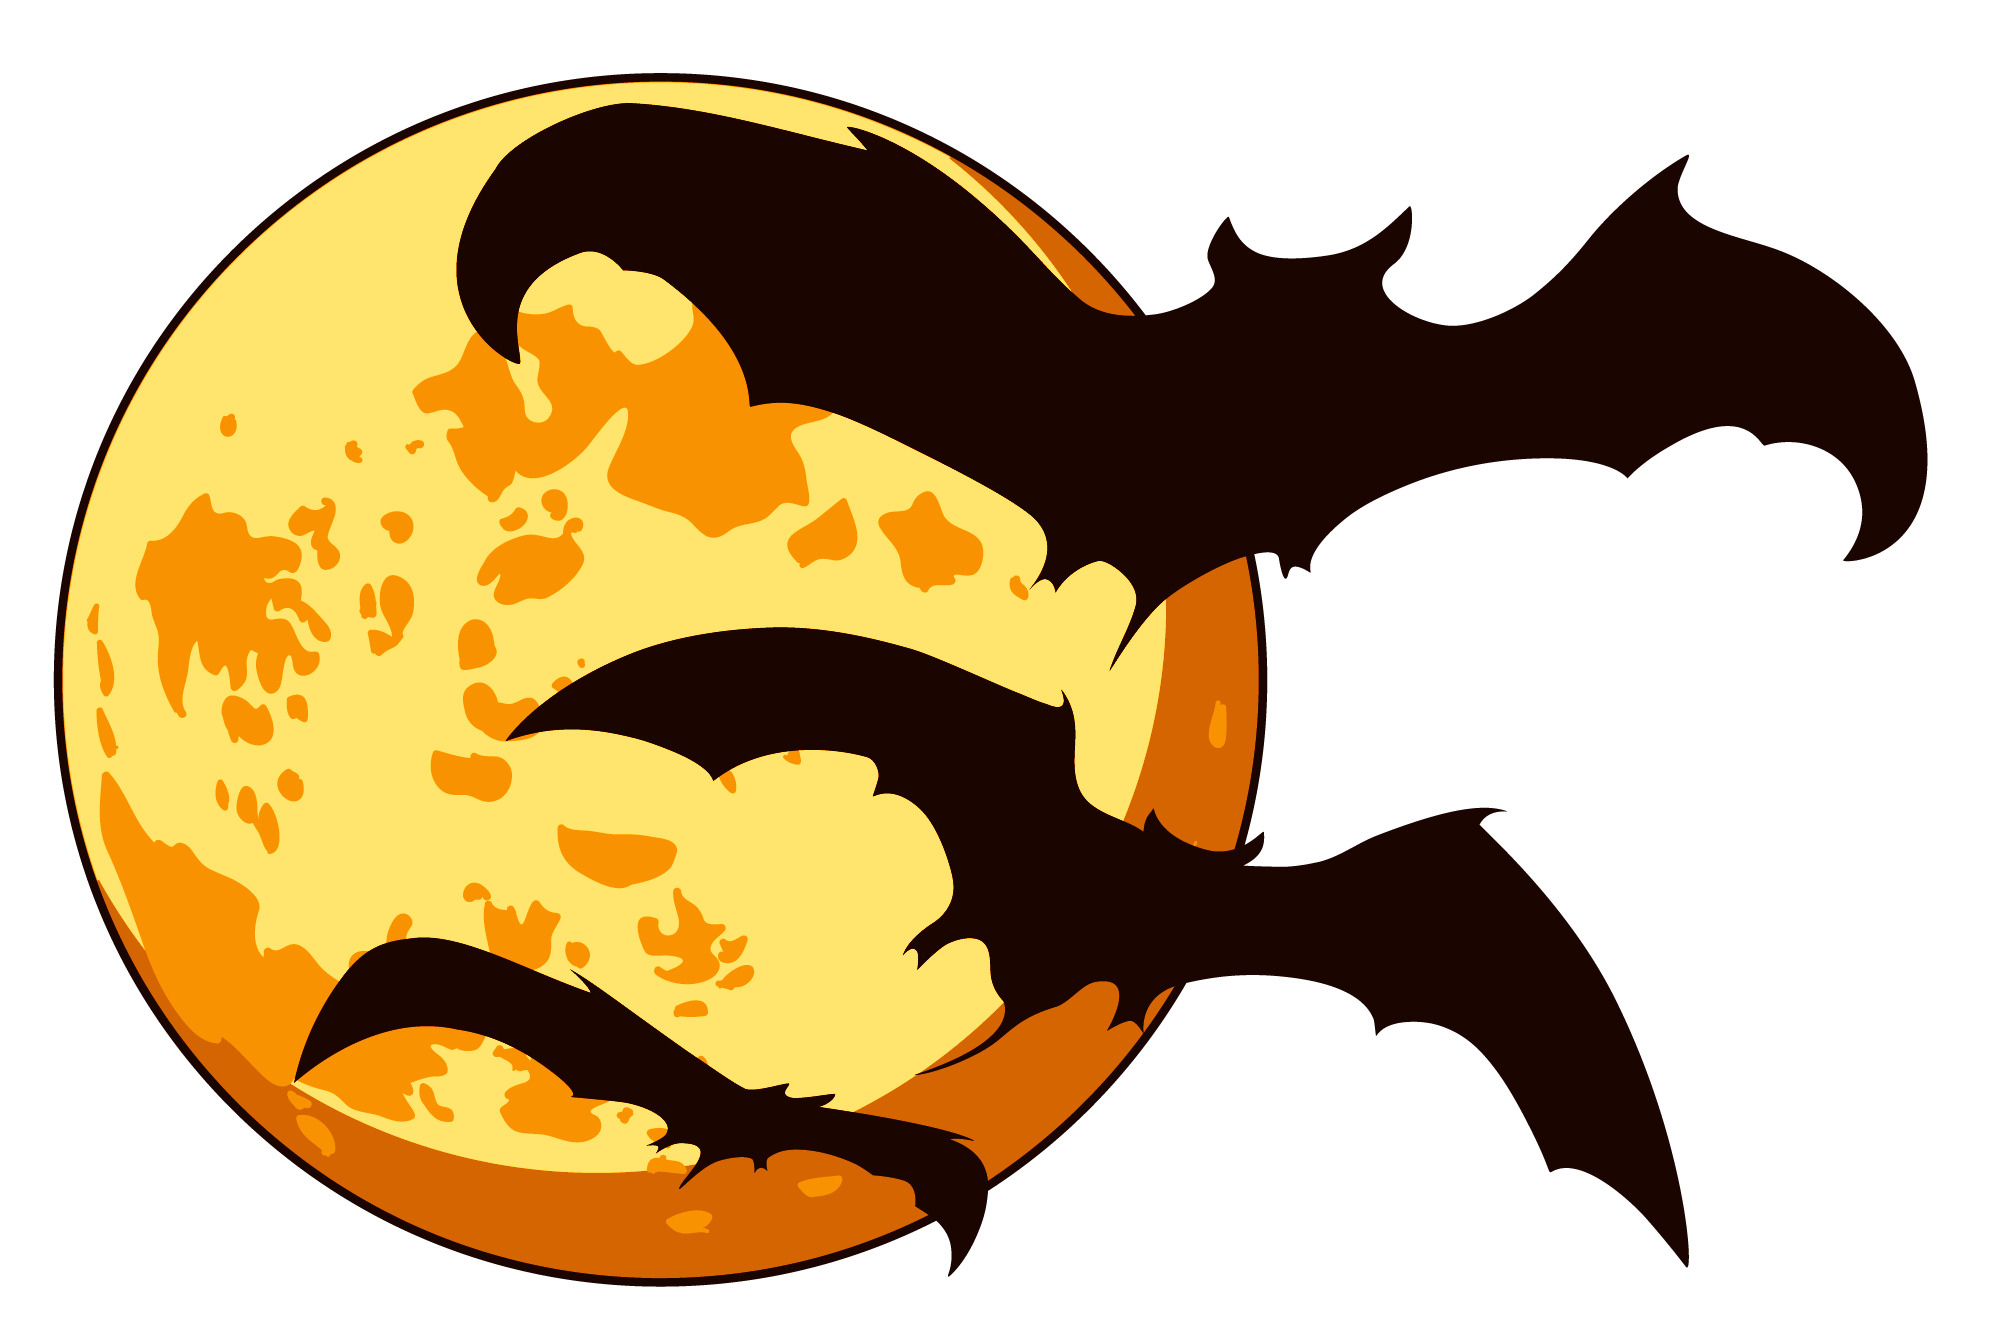 Orange Moon and Bats Halloween icons